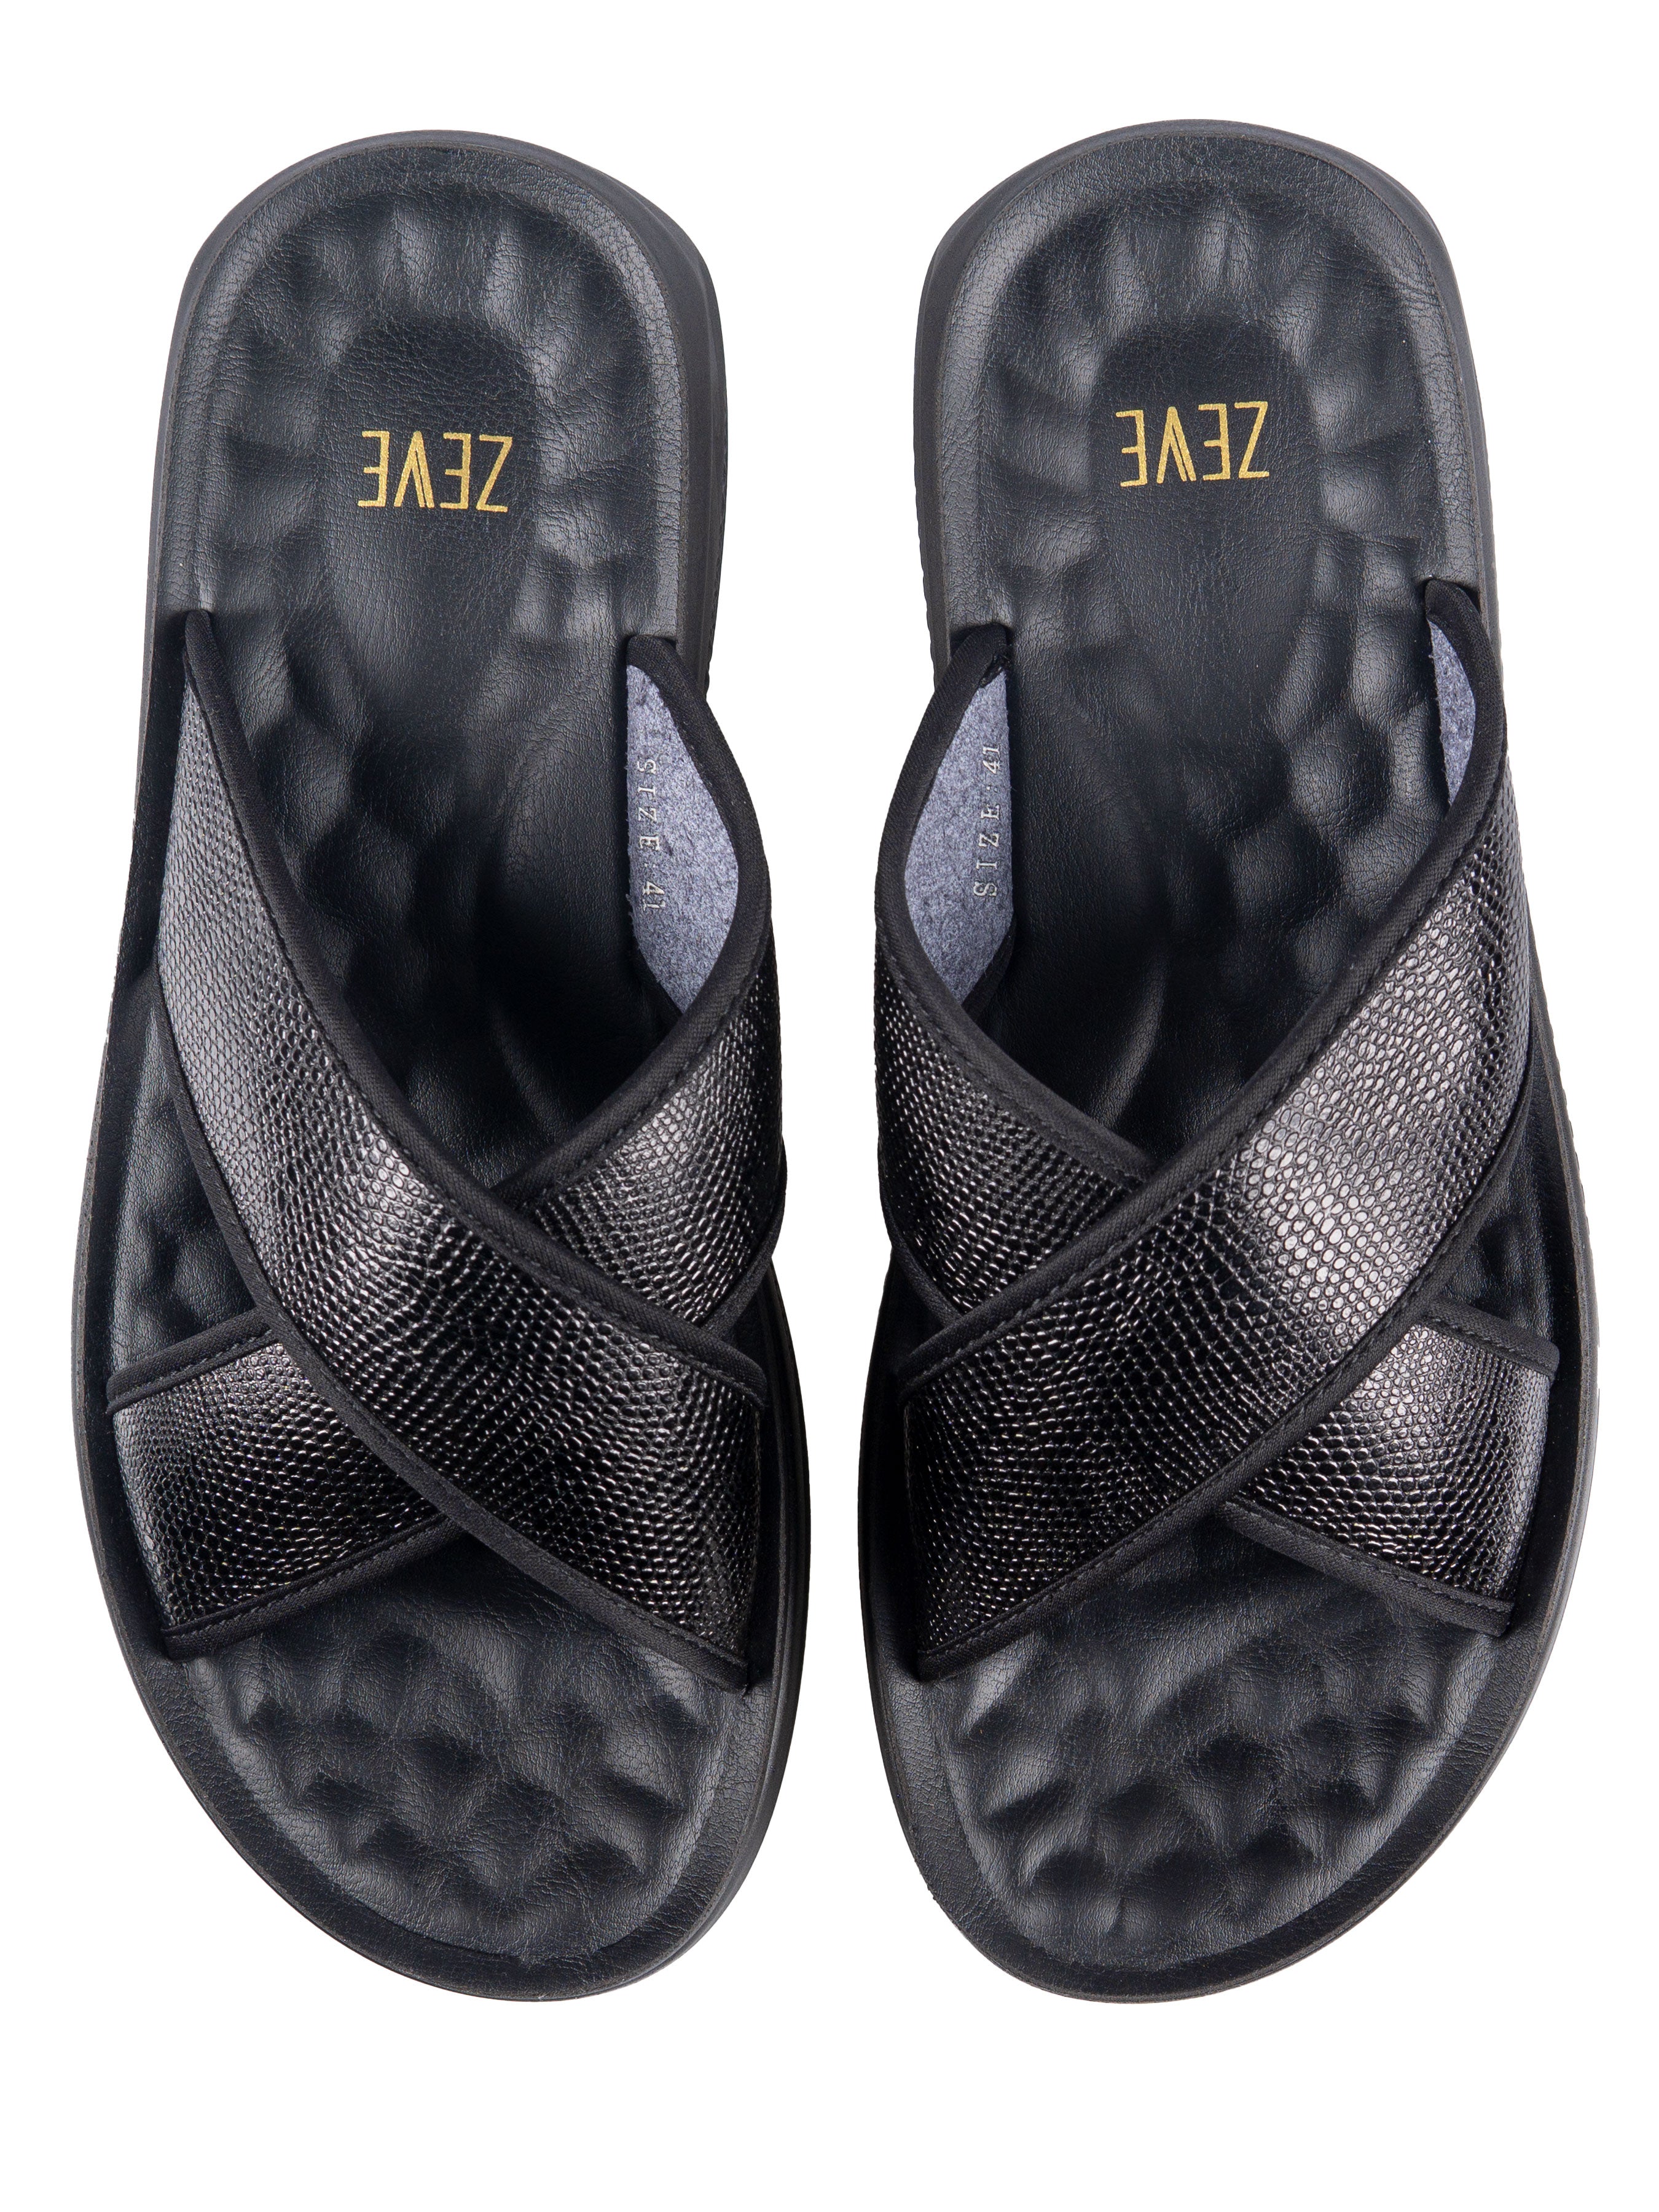 Cross Strap Sandal - Black Phyton Leather - Zeve Shoes